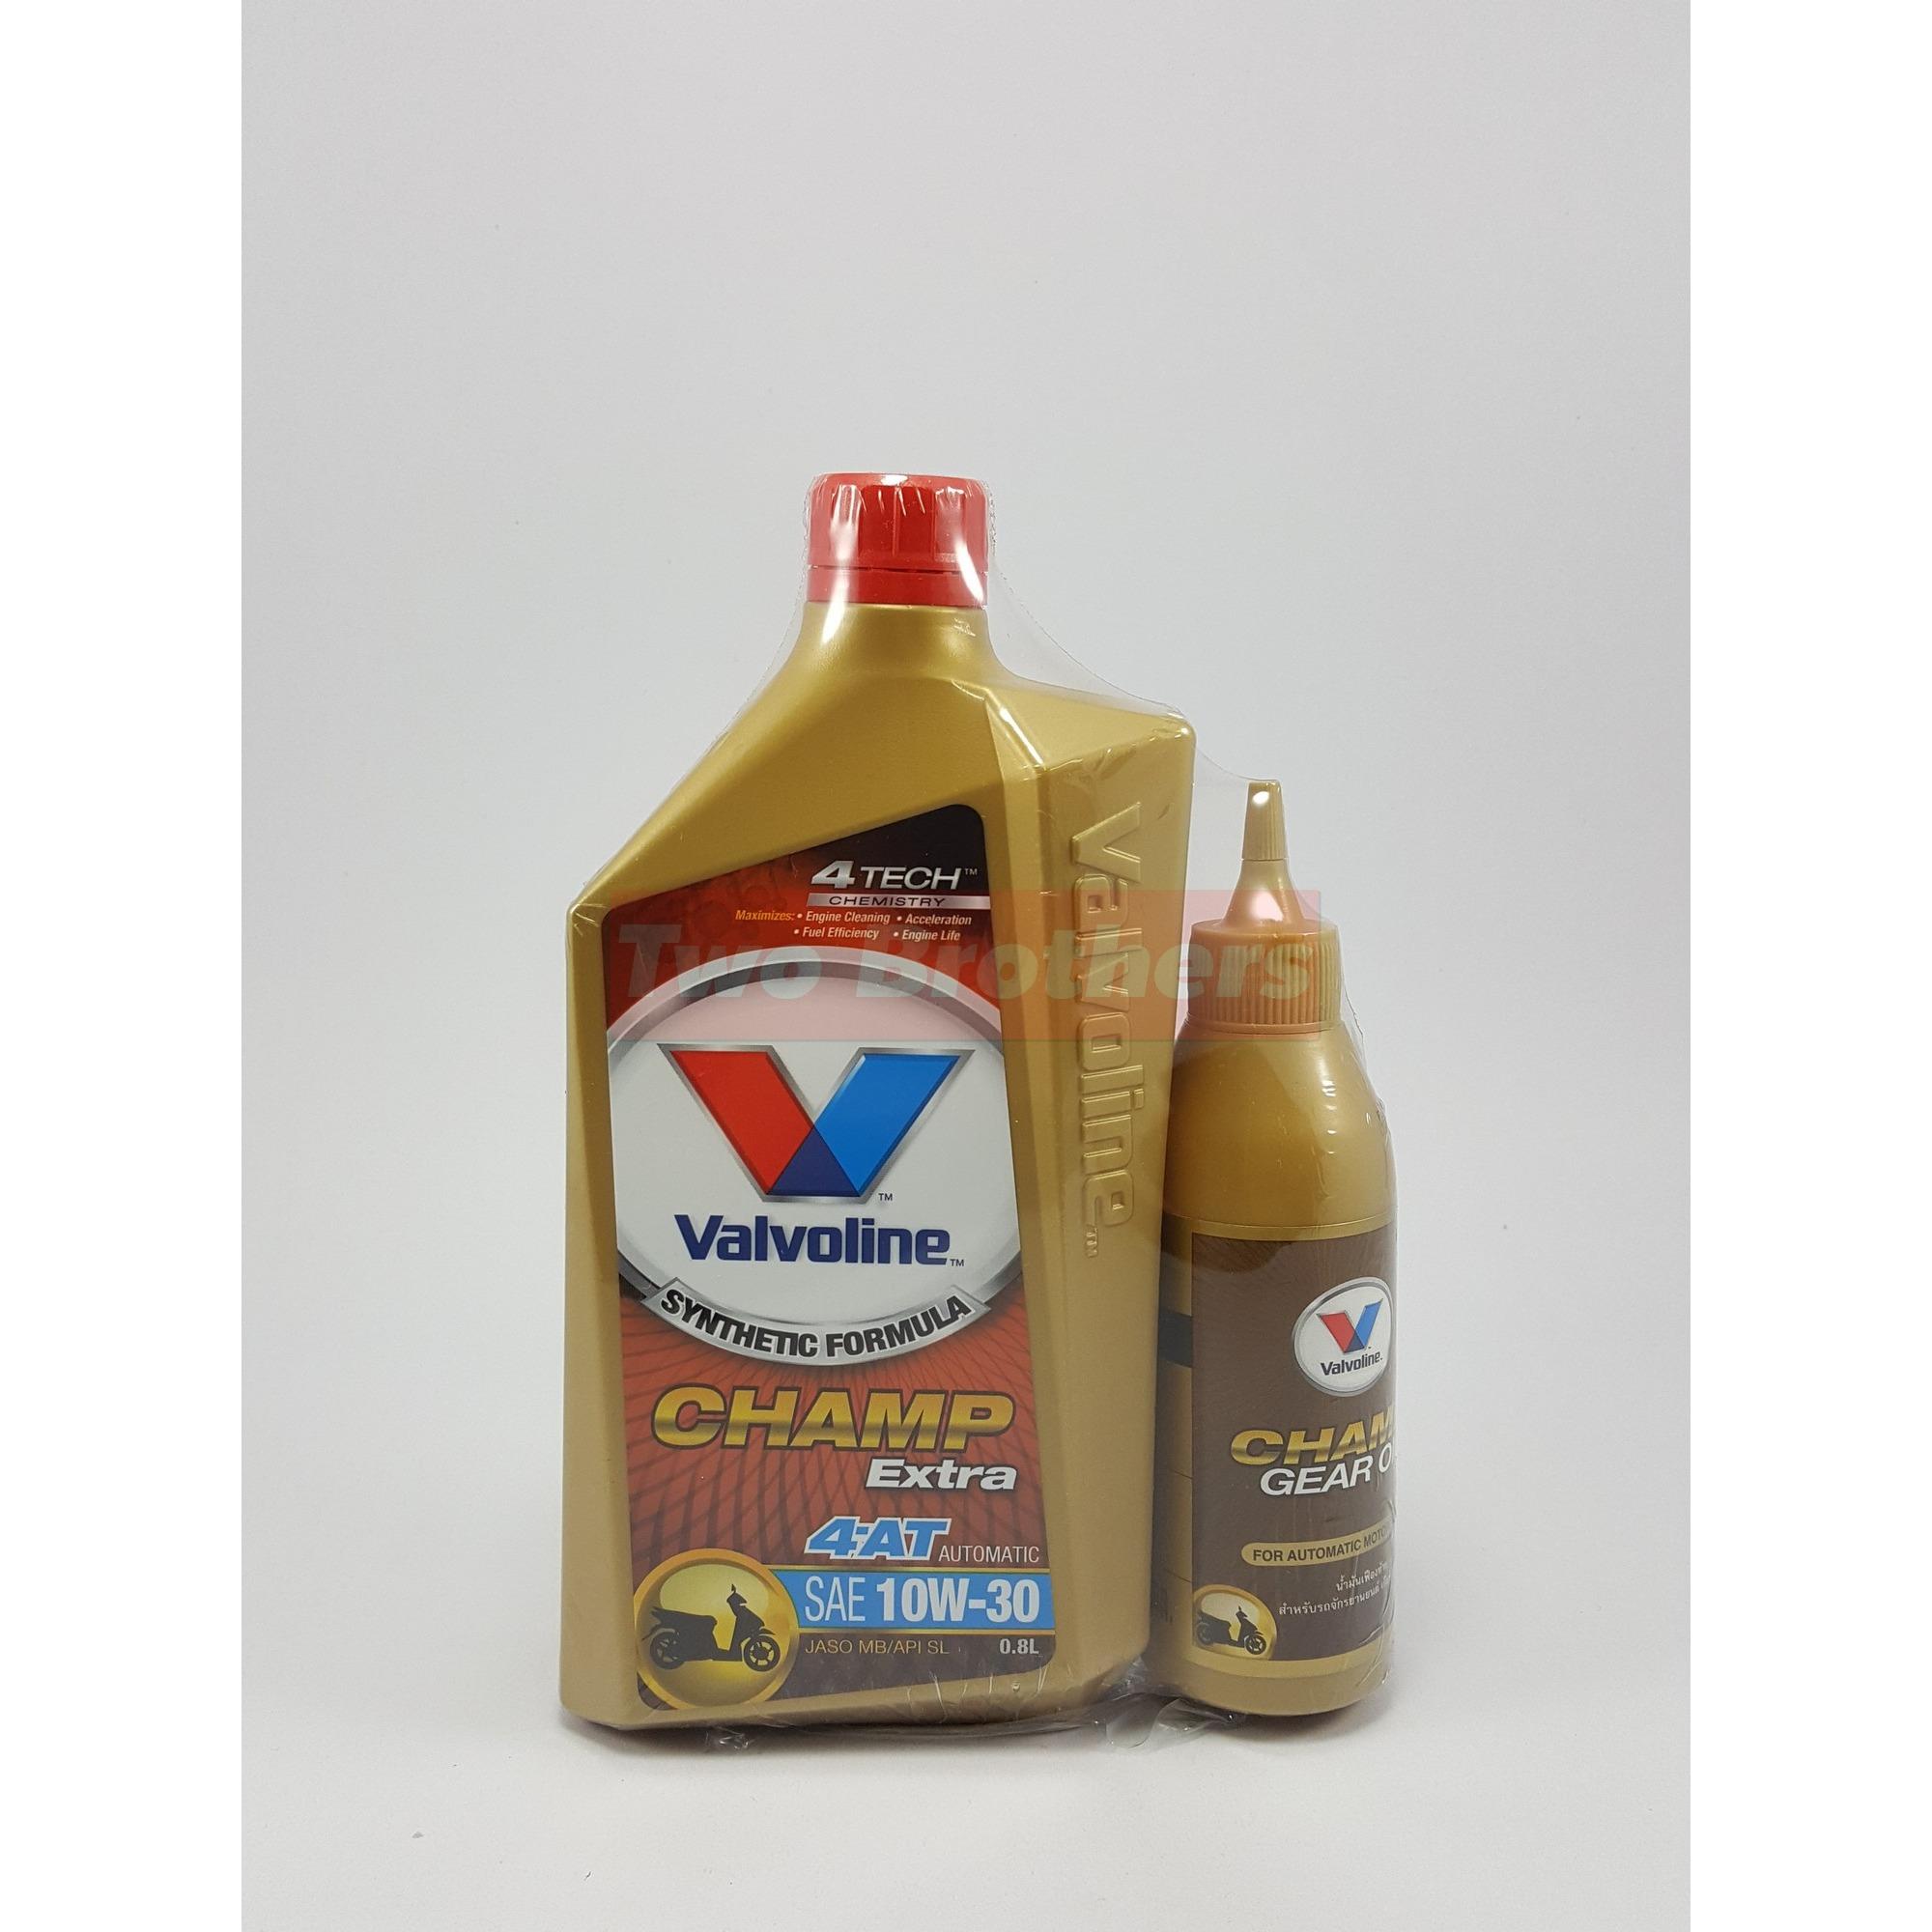 Valvoline Champ Extra 4AT 0.8L.+Champ Gear Oil 120 ml.